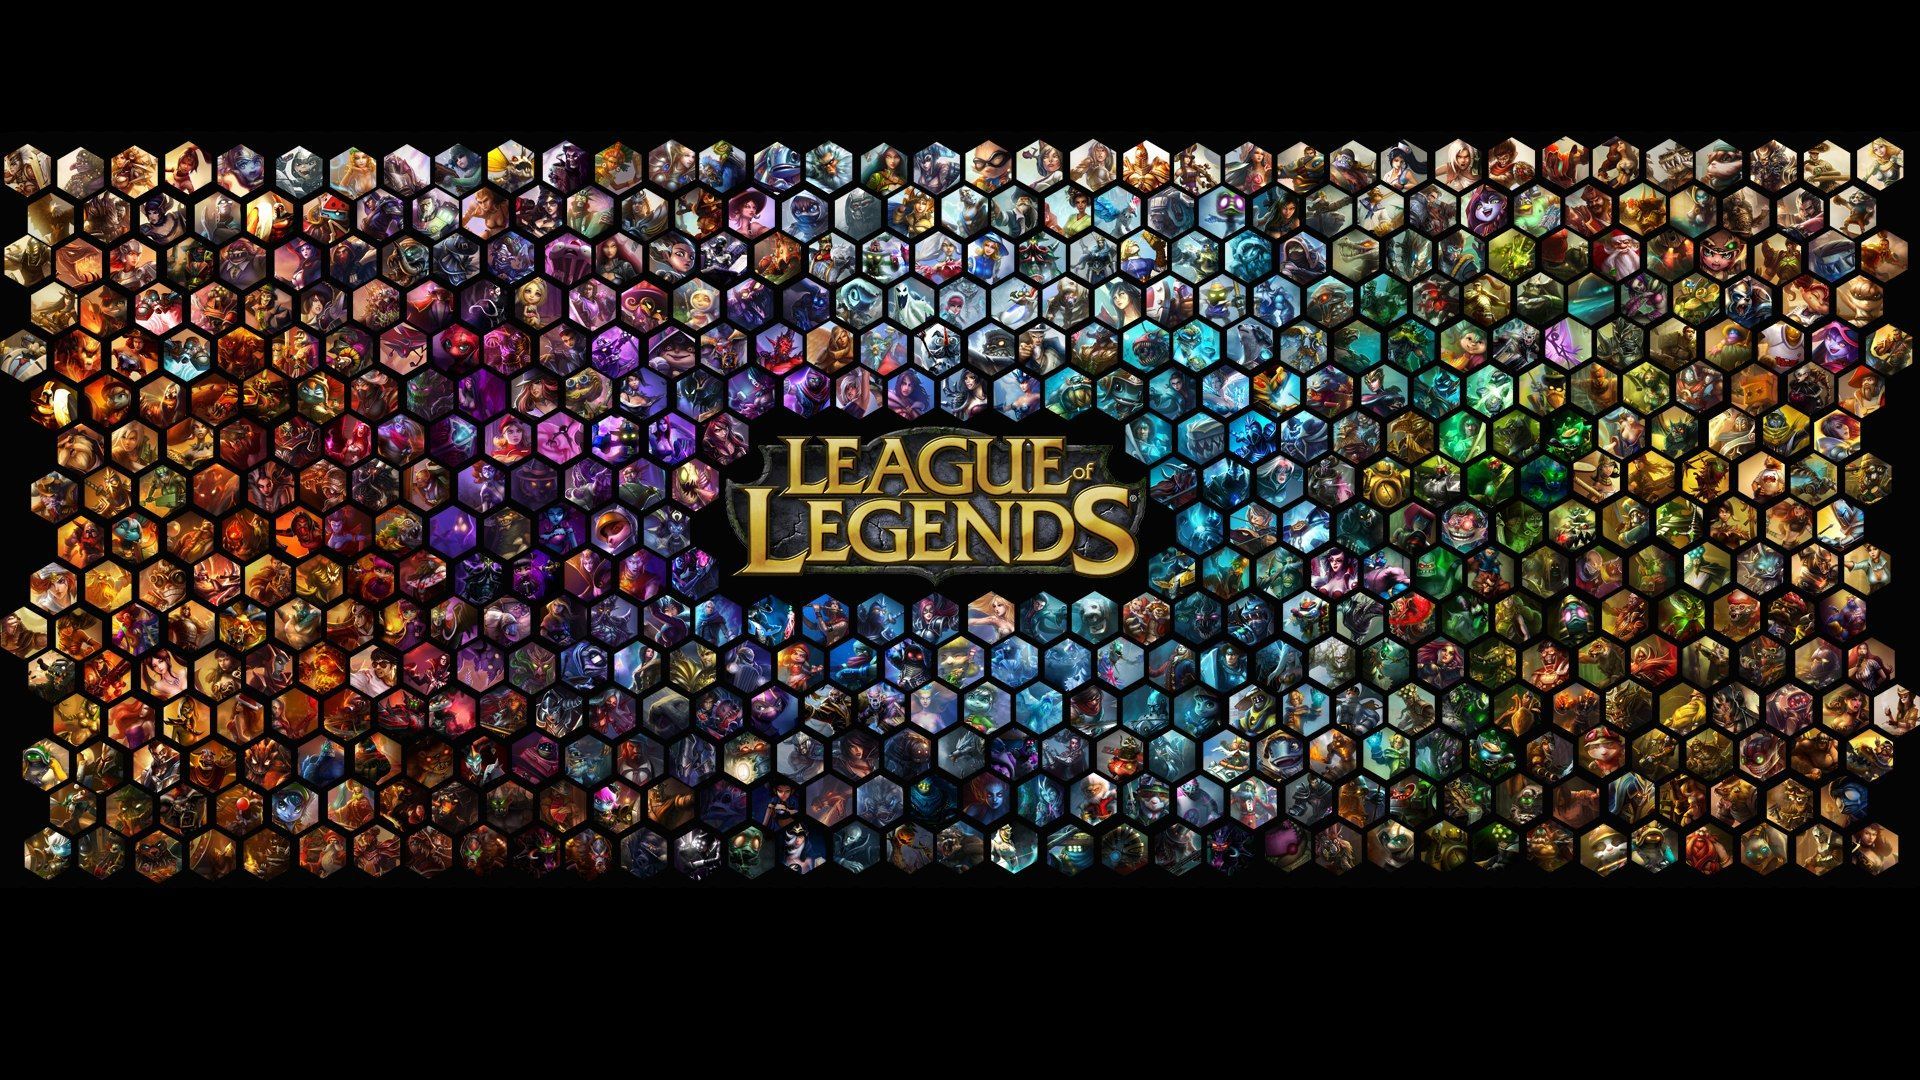 League of legends wallpaper 1920x1080 - (#44630) - High Quality ...